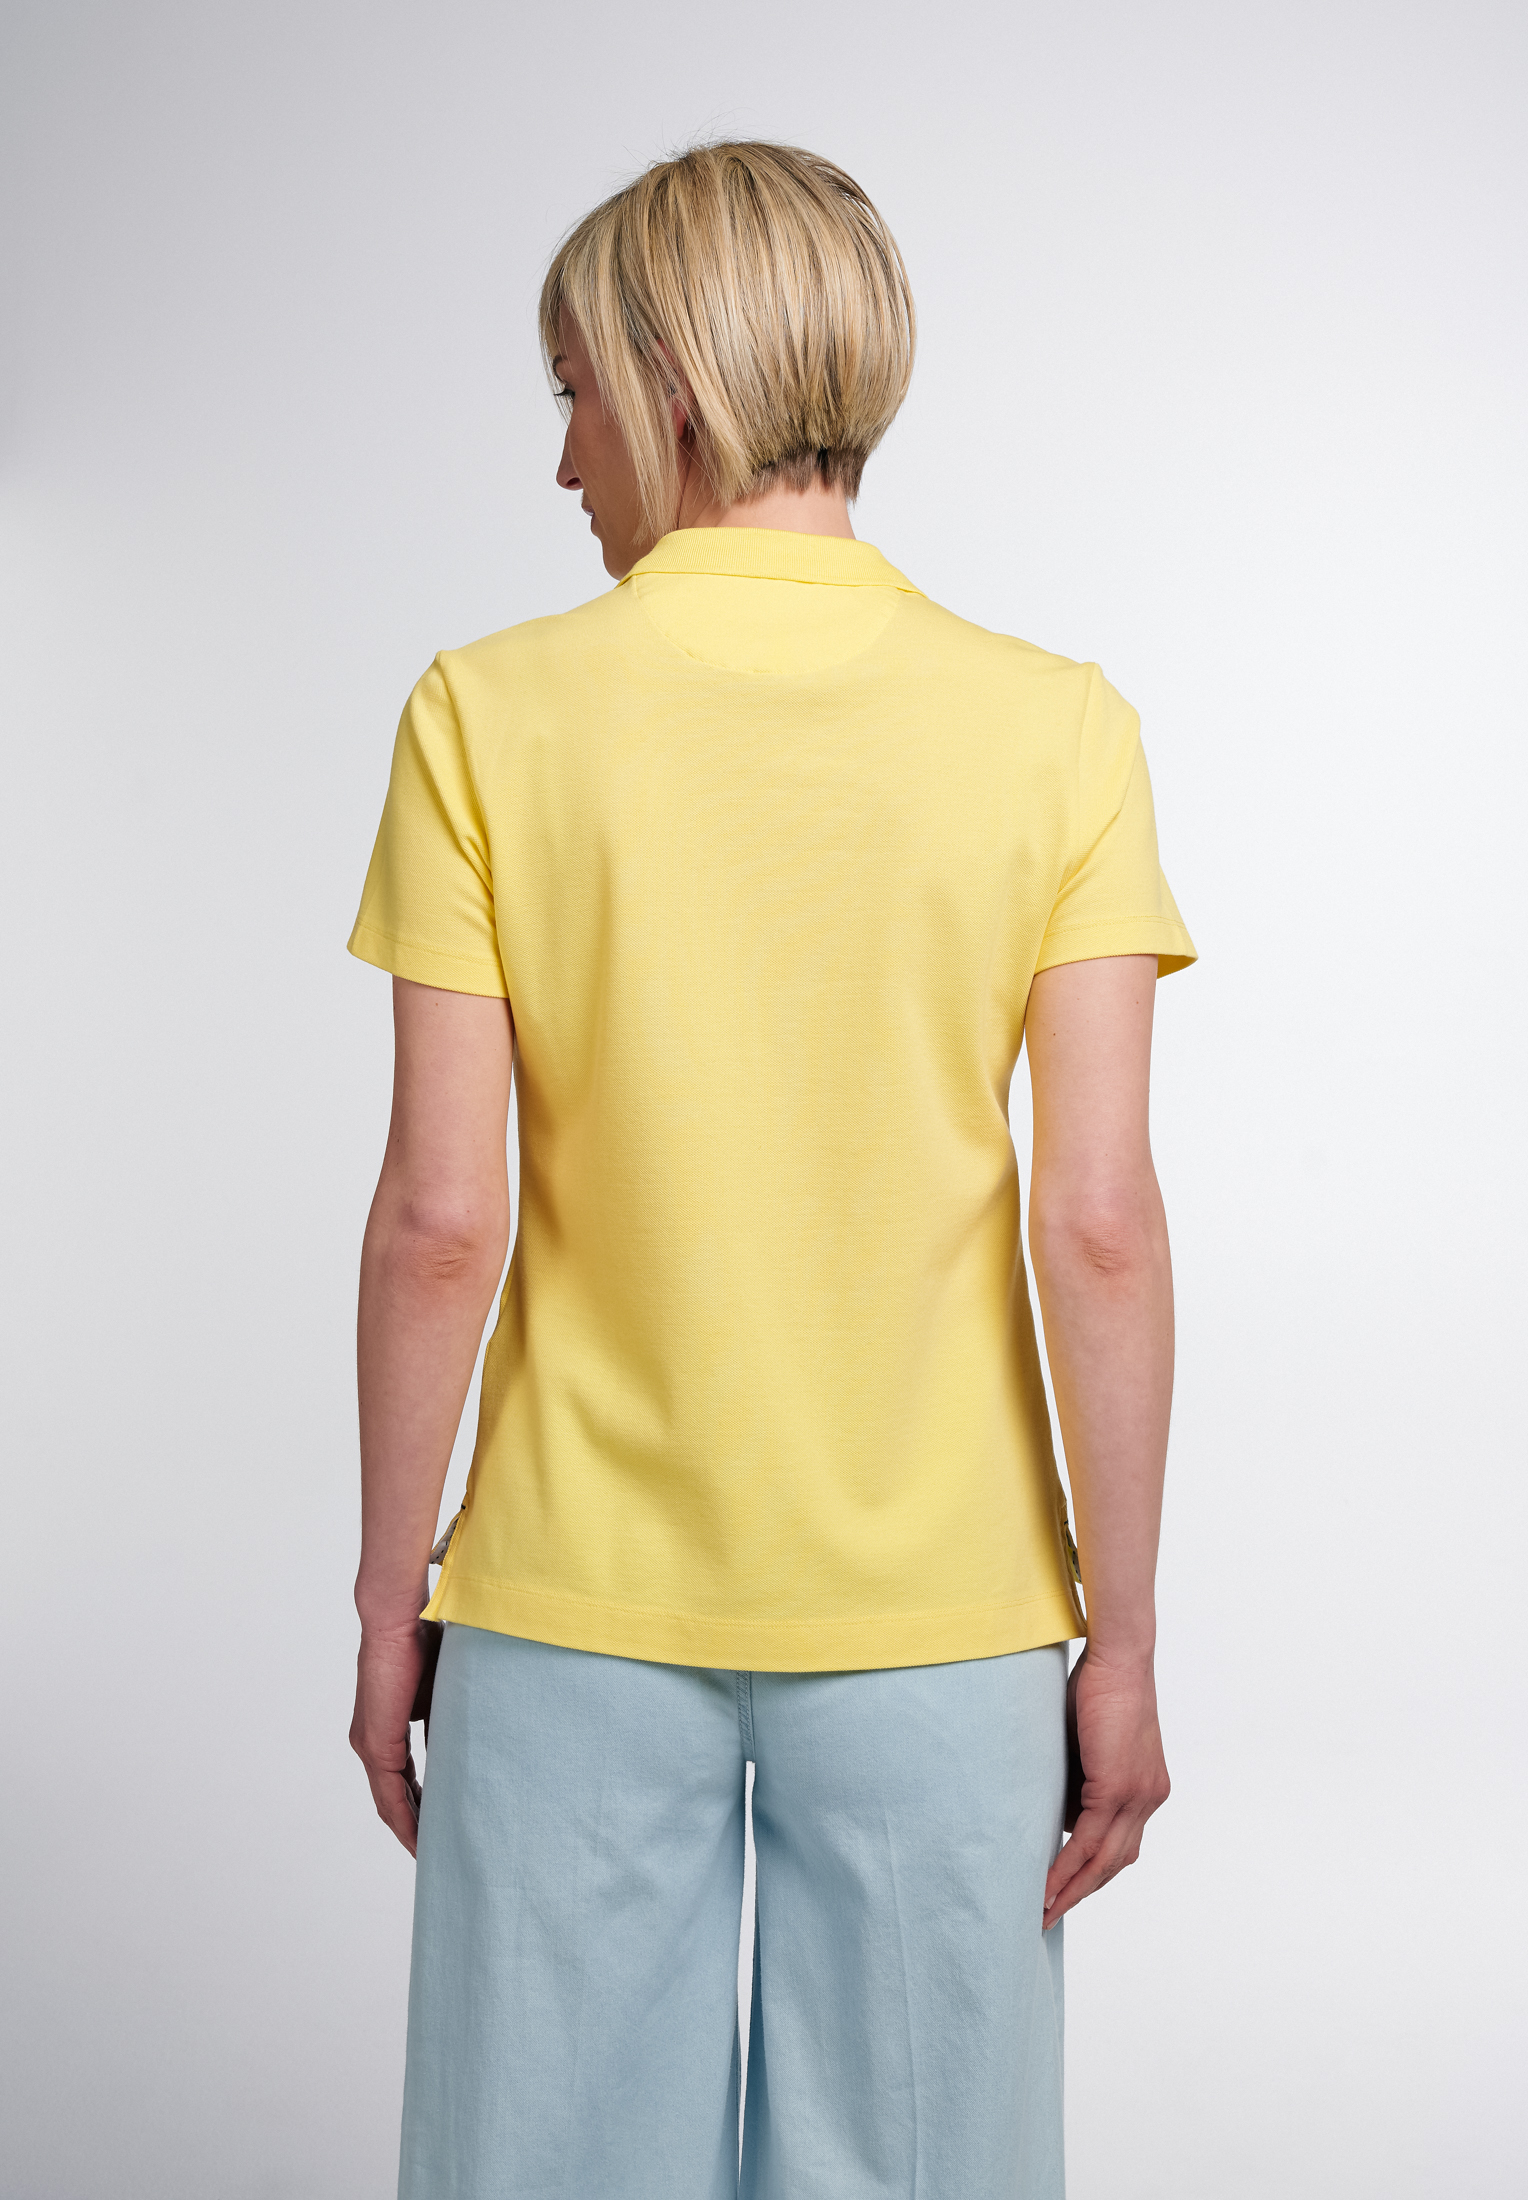 Poloshirt in gelb unifarben | | 7XL 2SP00006-07-01-7XL-1/2 Kurzarm | | gelb